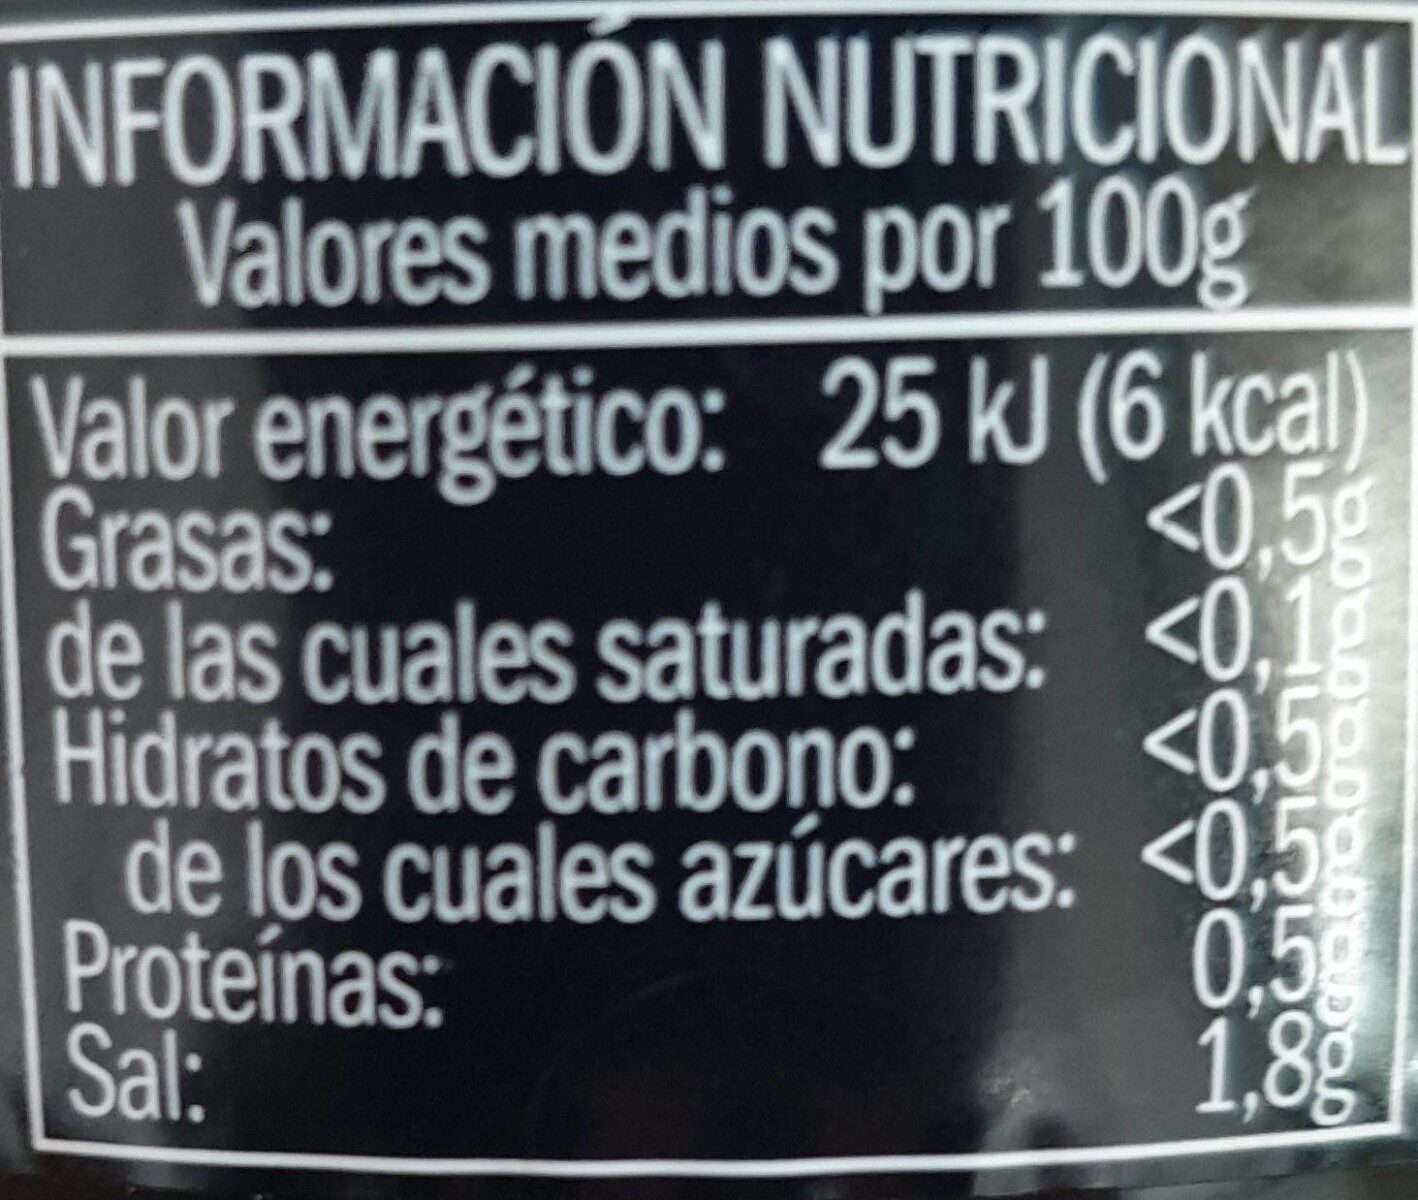 Caviar Noir - Tableau nutritionnel